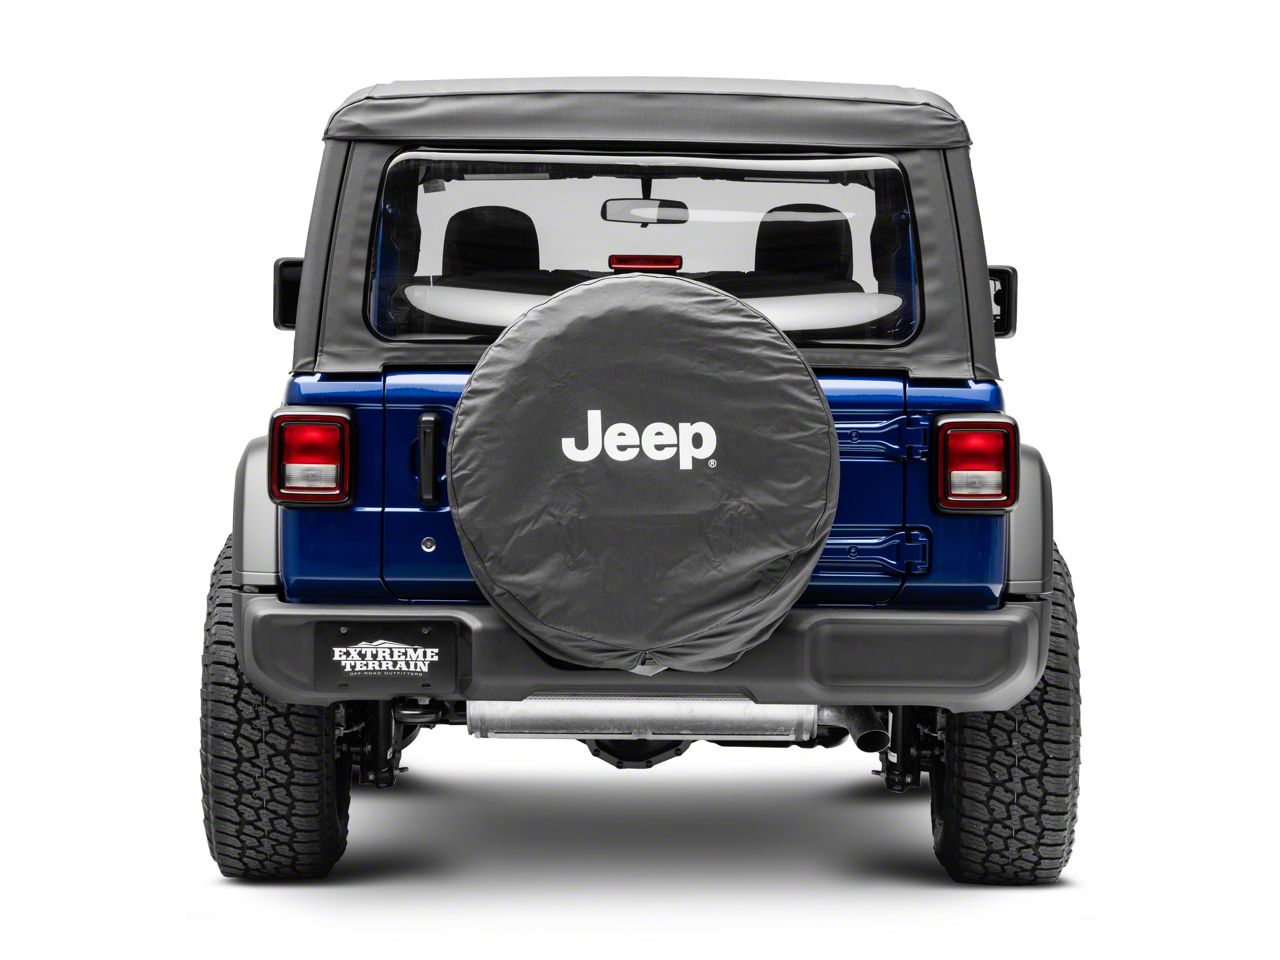 Mopar Jeep Wrangler Jeep Logo Spare Tire Cover; Black and White J129630 (66-18  Jeep CJ5, CJ7, Wrangler YJ, TJ  JK) Free Shipping